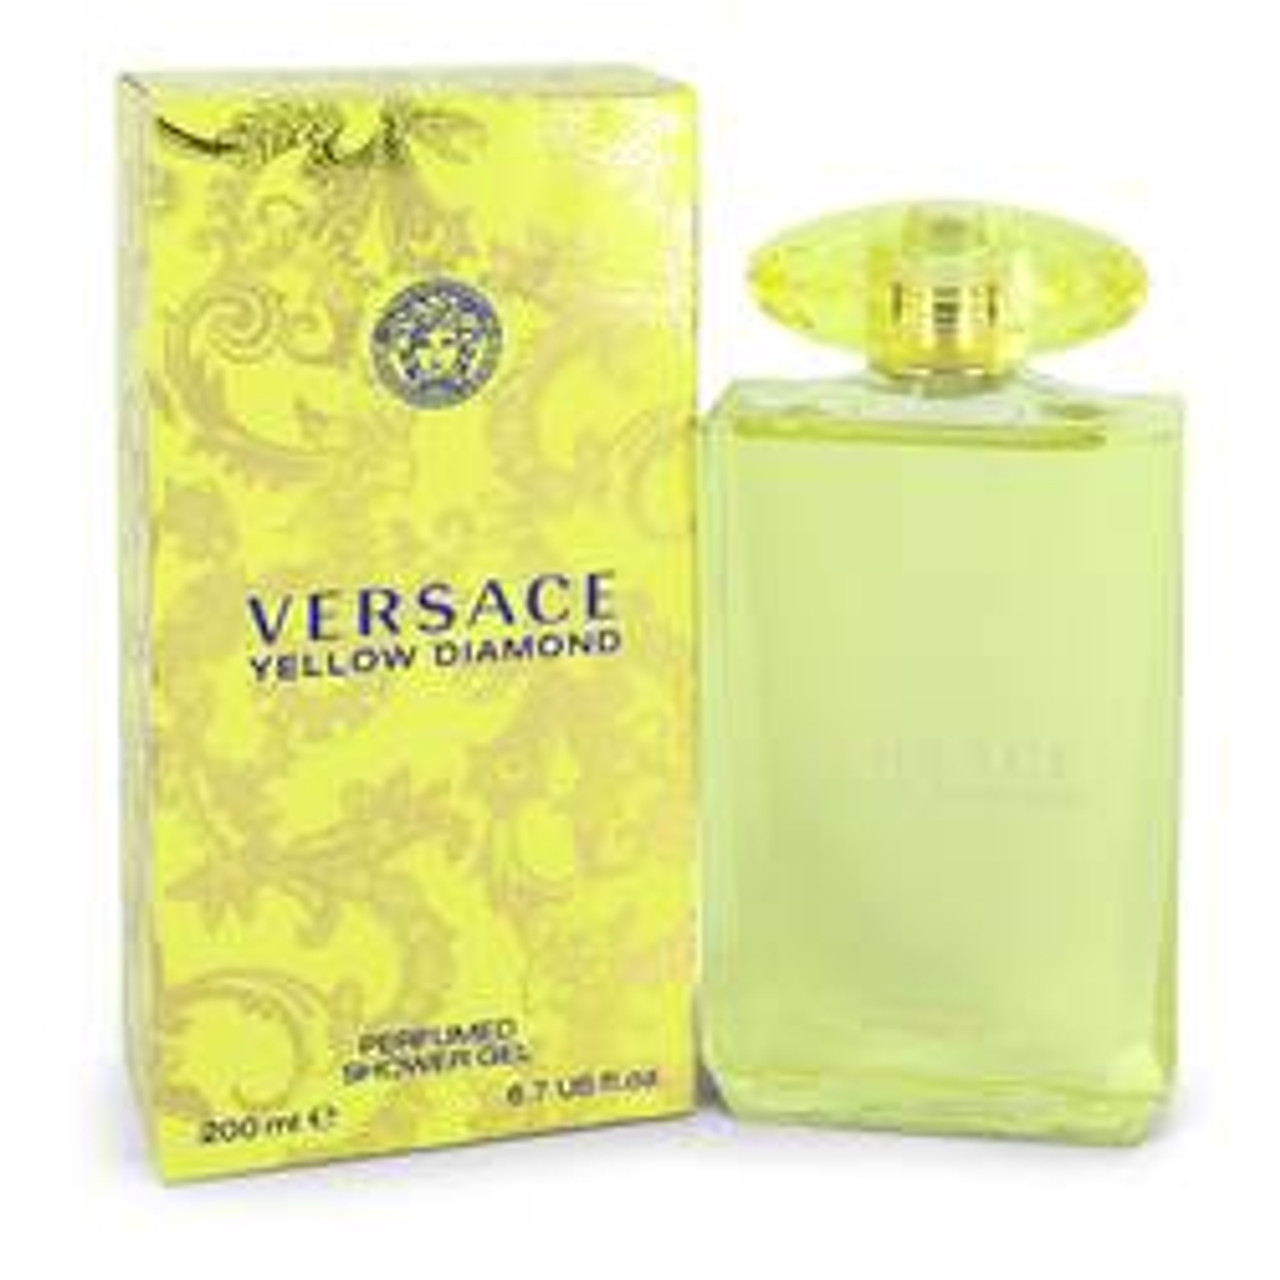 Versace Yellow Diamond Perfume By Versace Shower Gel 6.7 oz for Women - *Pre-Order